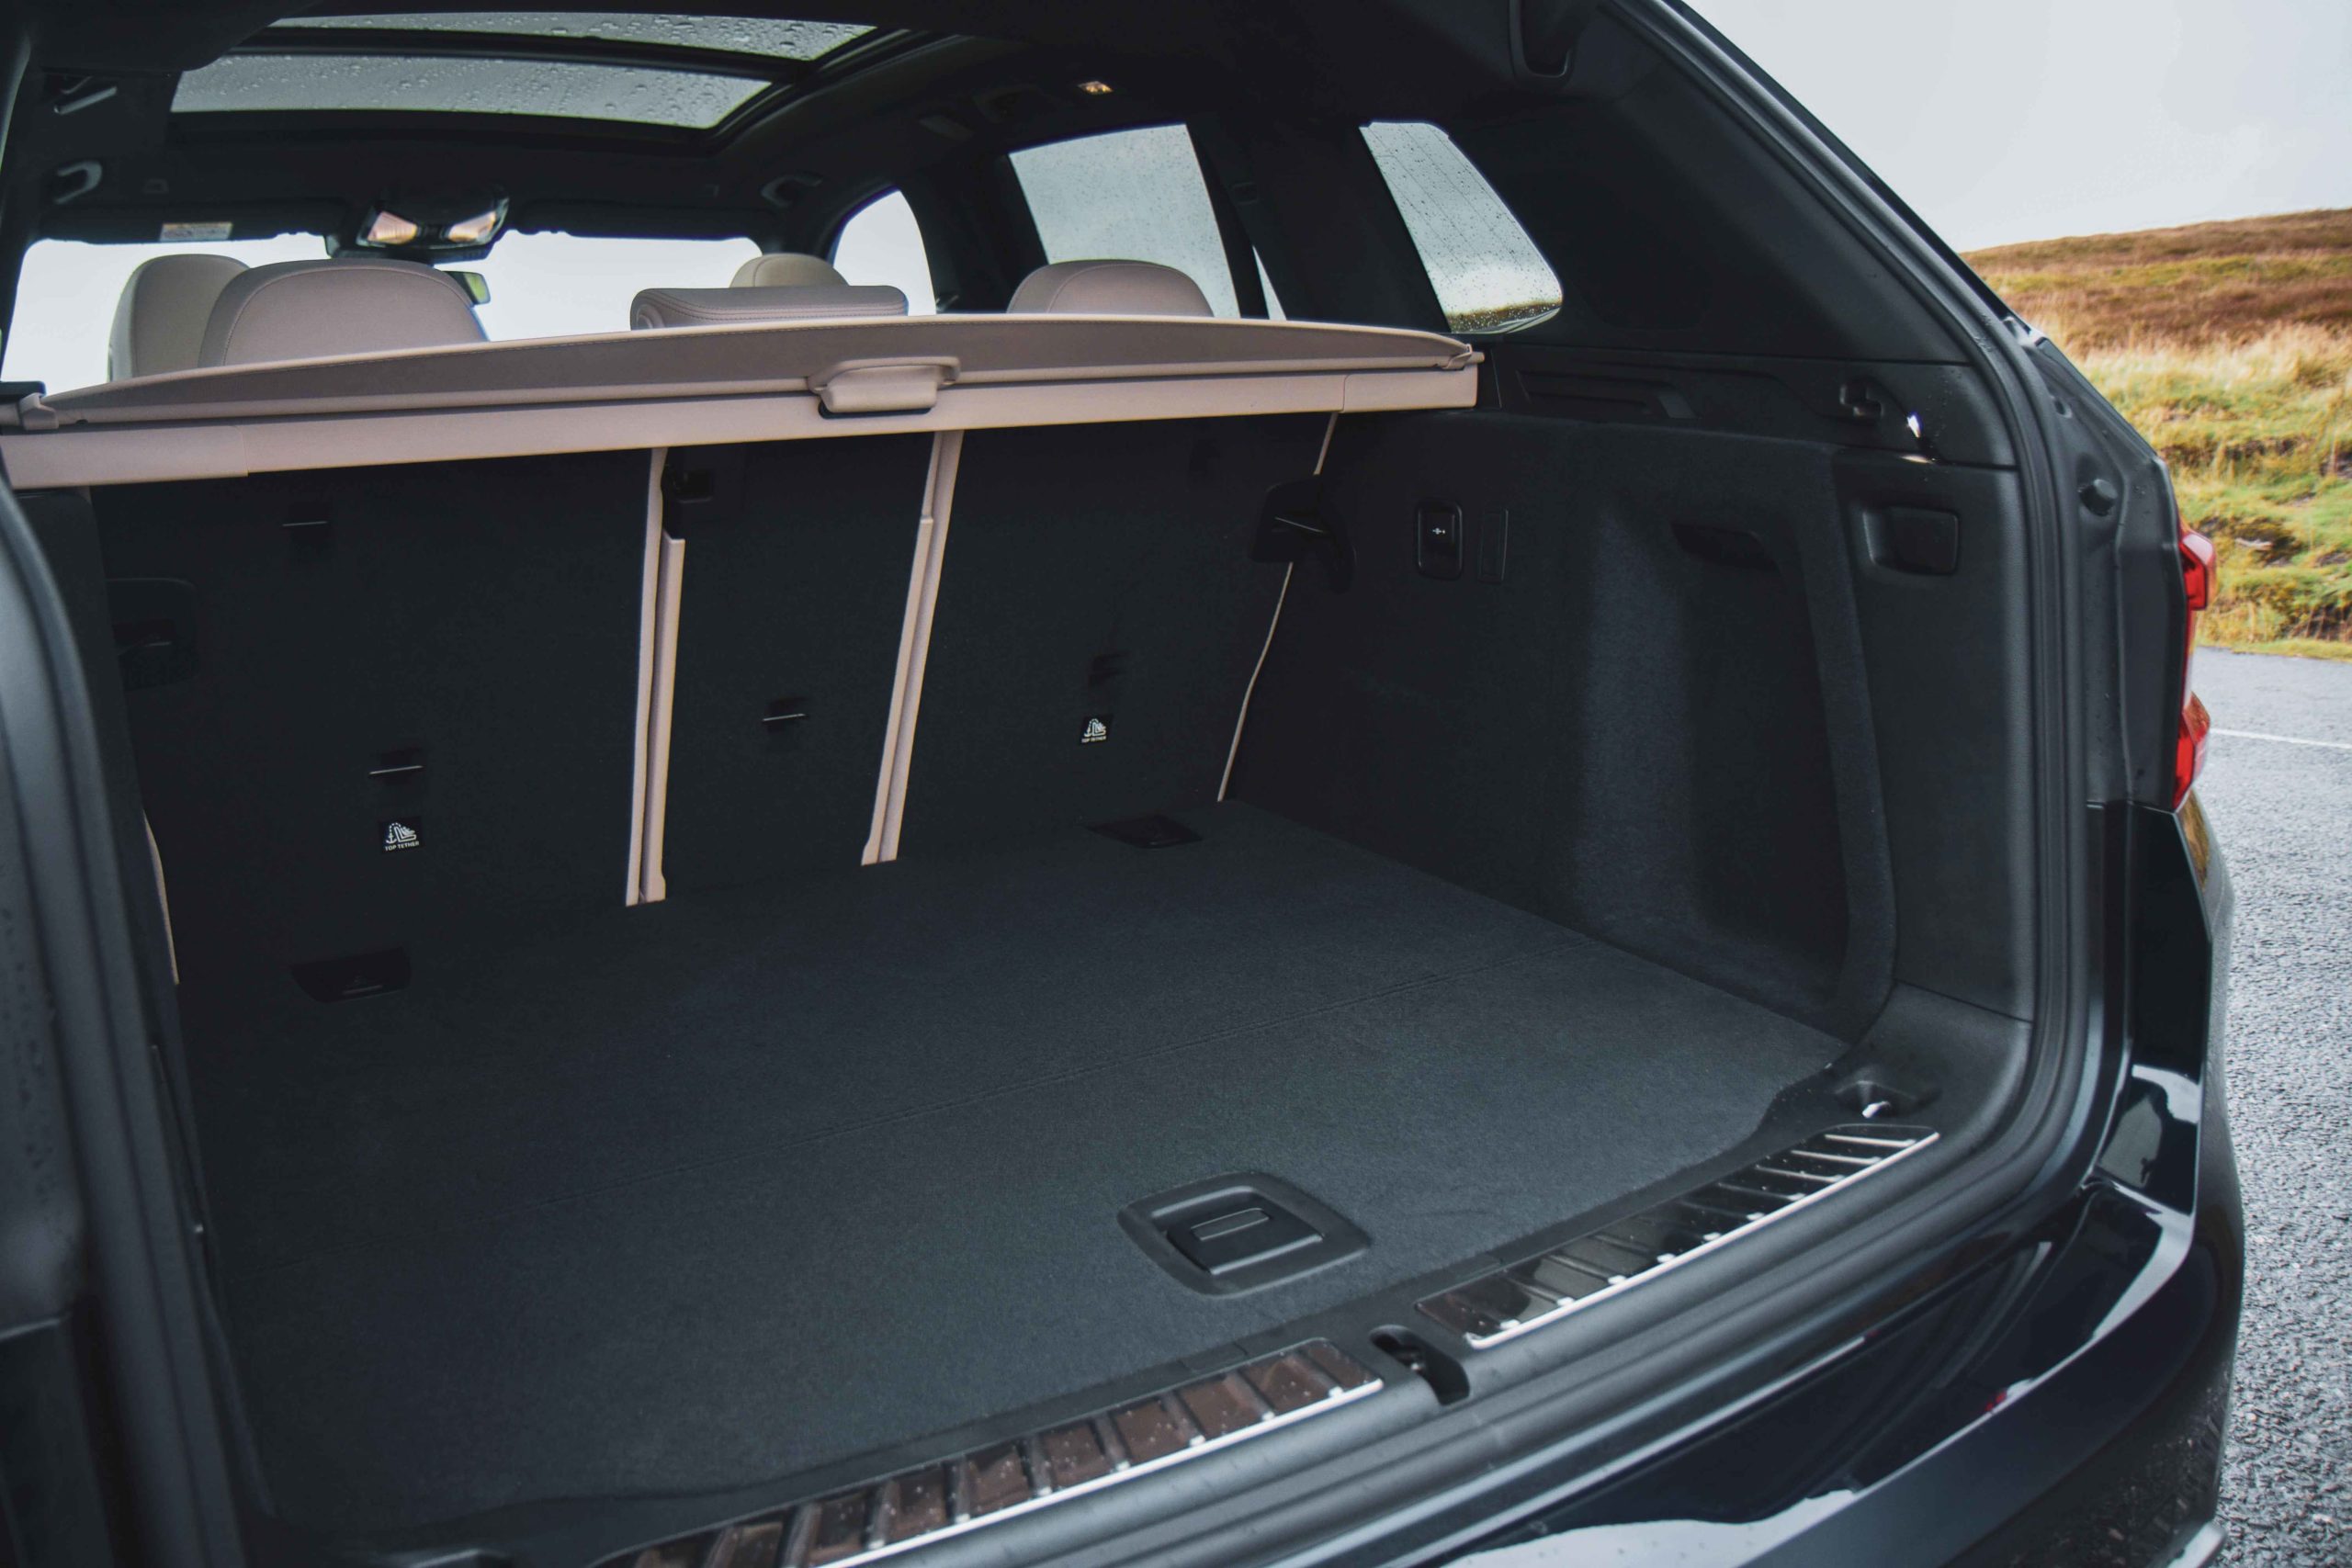 BMW iX3 Premier Edition boot space